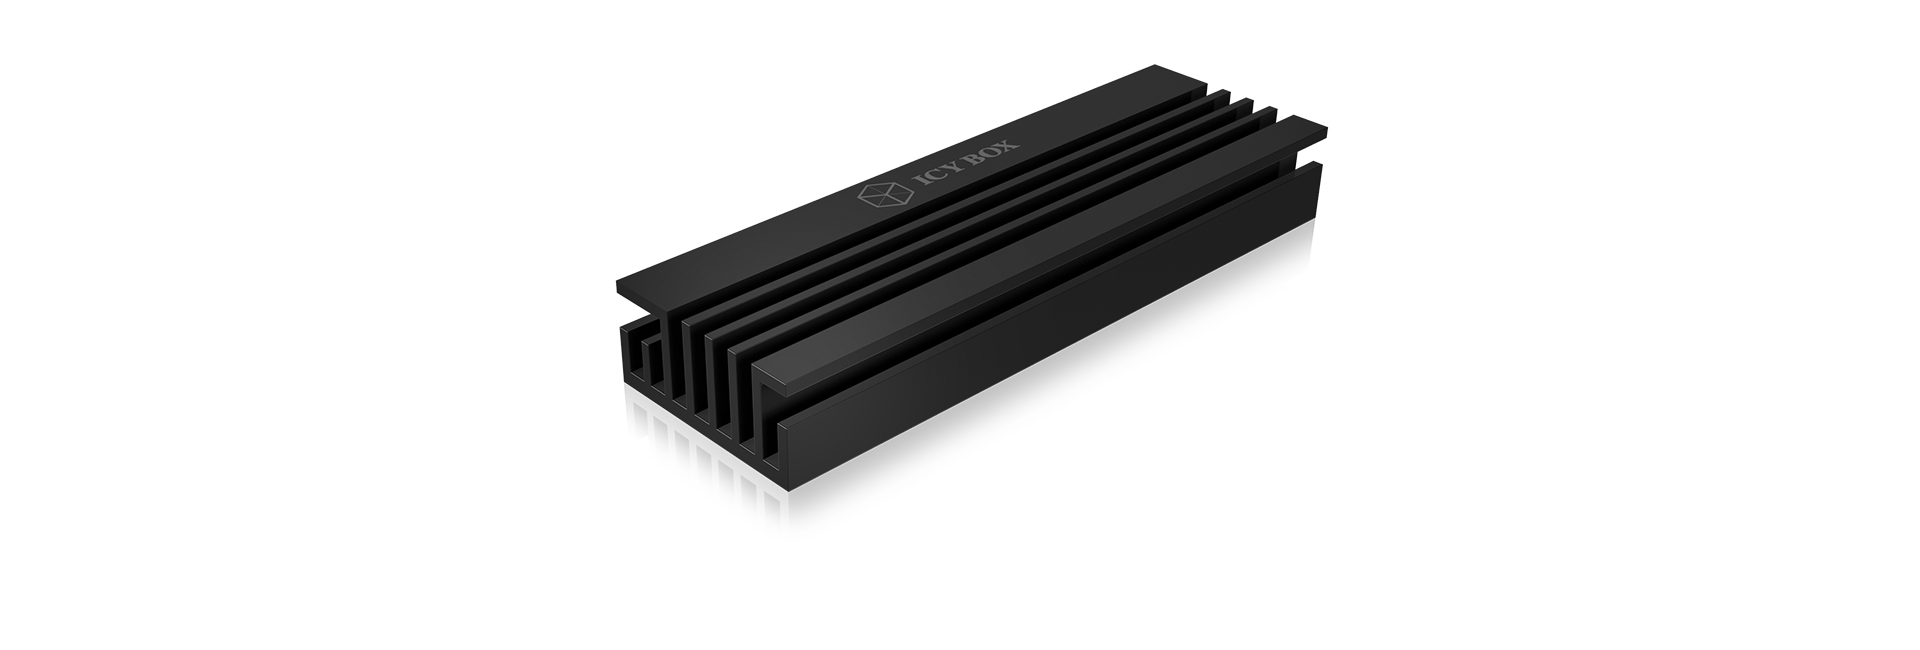 ICY BOX | Kühlkörperset für M.2 SSD, Aluminium, 10 mm dick | anthracite